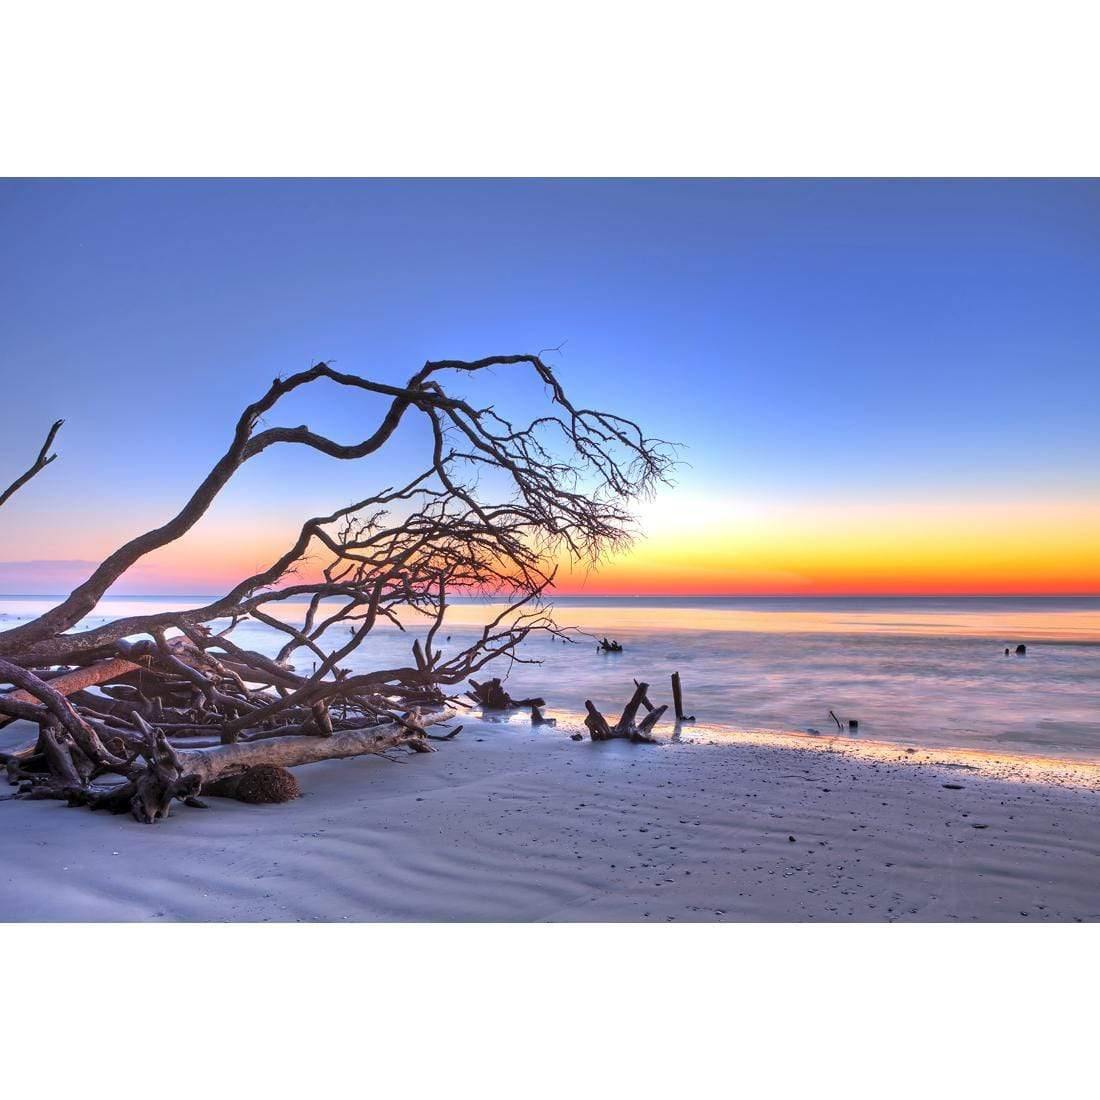 Driftwood Sunrise - wallart-australia - Canvas